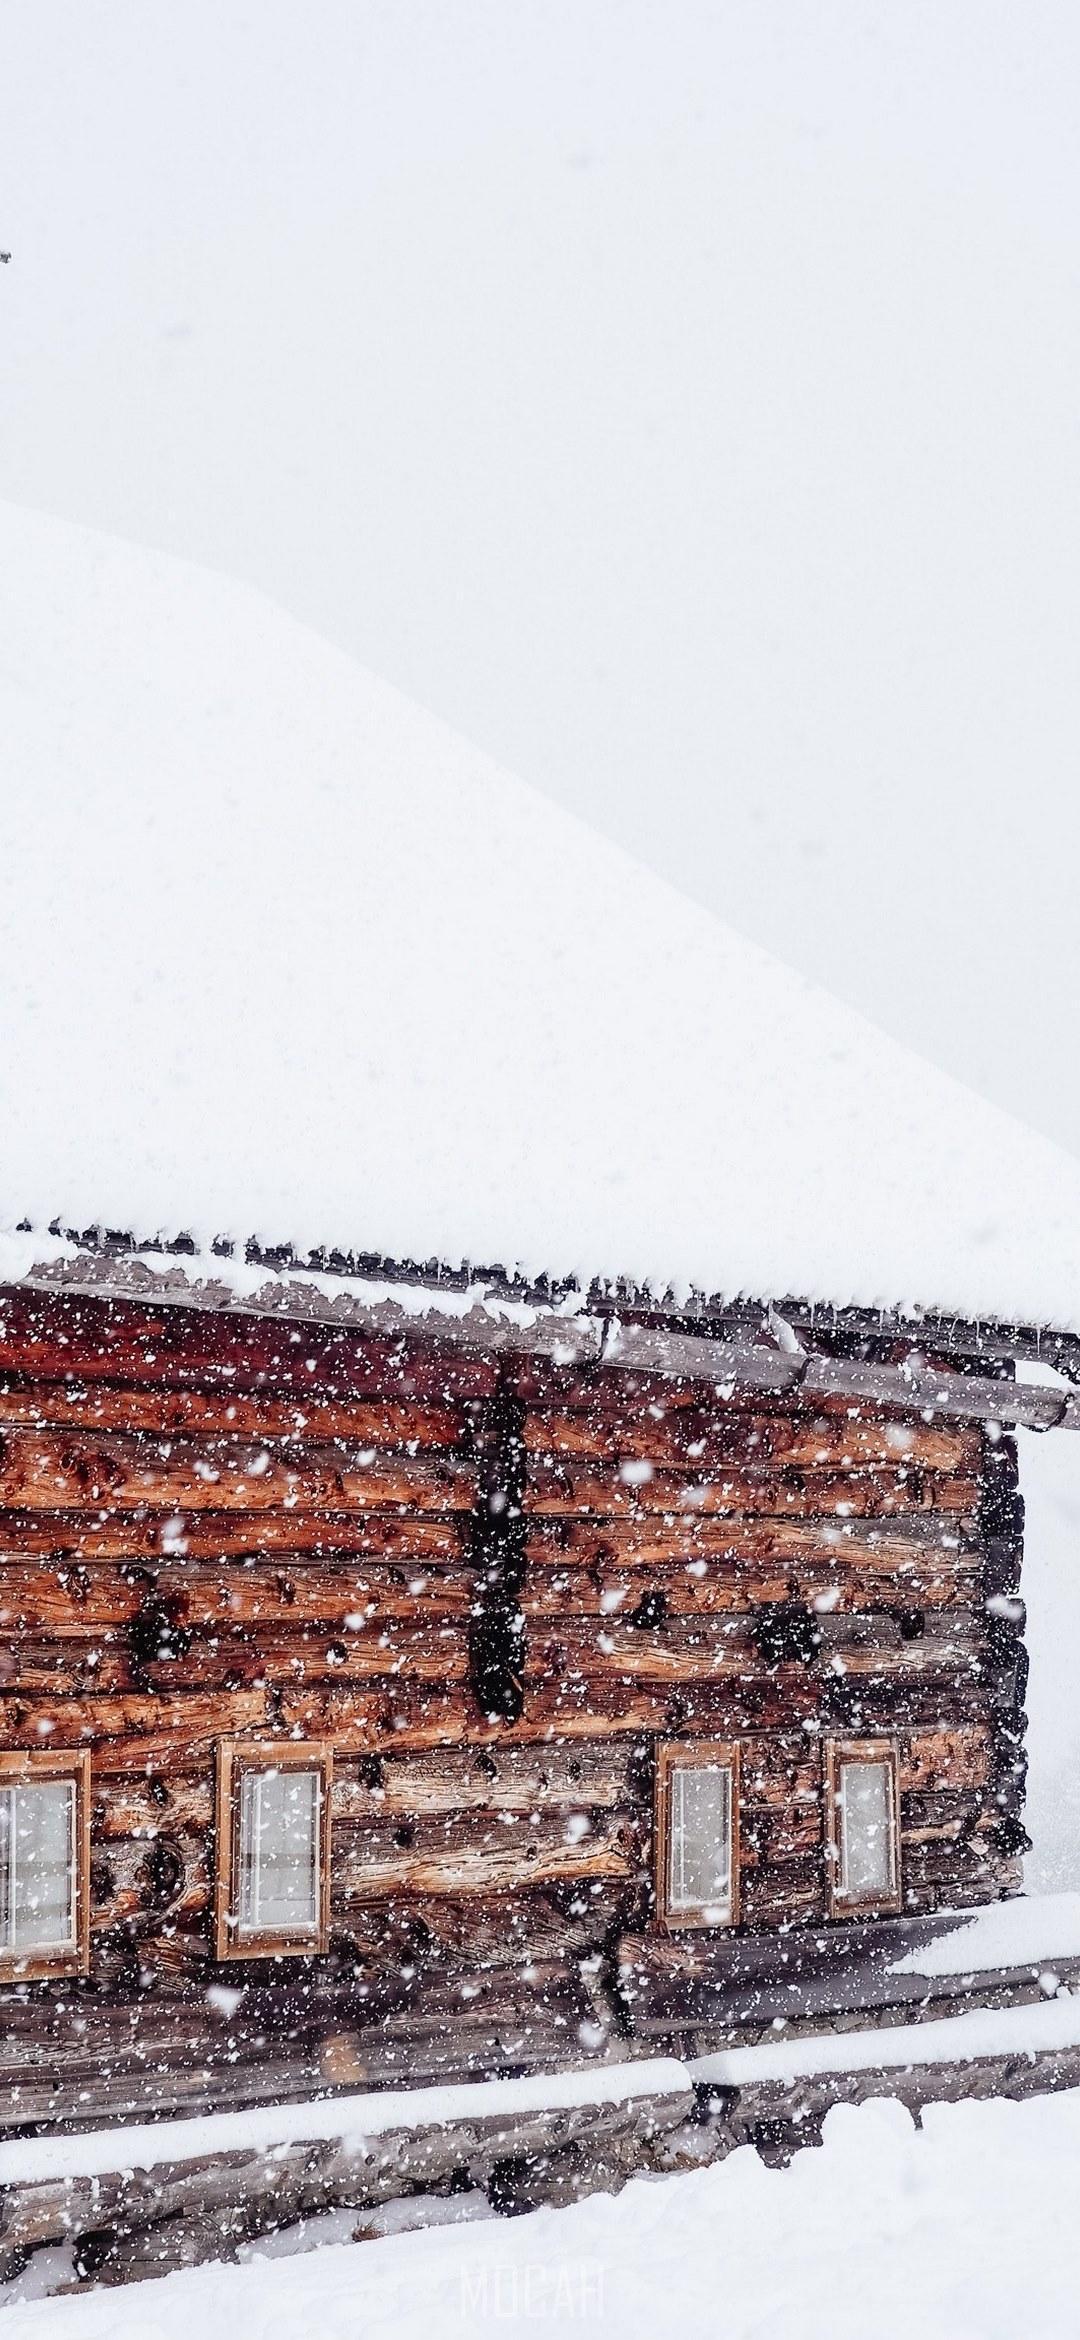 HD wallpaper, A Side View Of A Snow Covered Ski Lodge Sdwiener Htte In Austria, 1080X2340, Huawei Nova 6 Se Wallpaper Hd, Winter Winter Winter Is Here